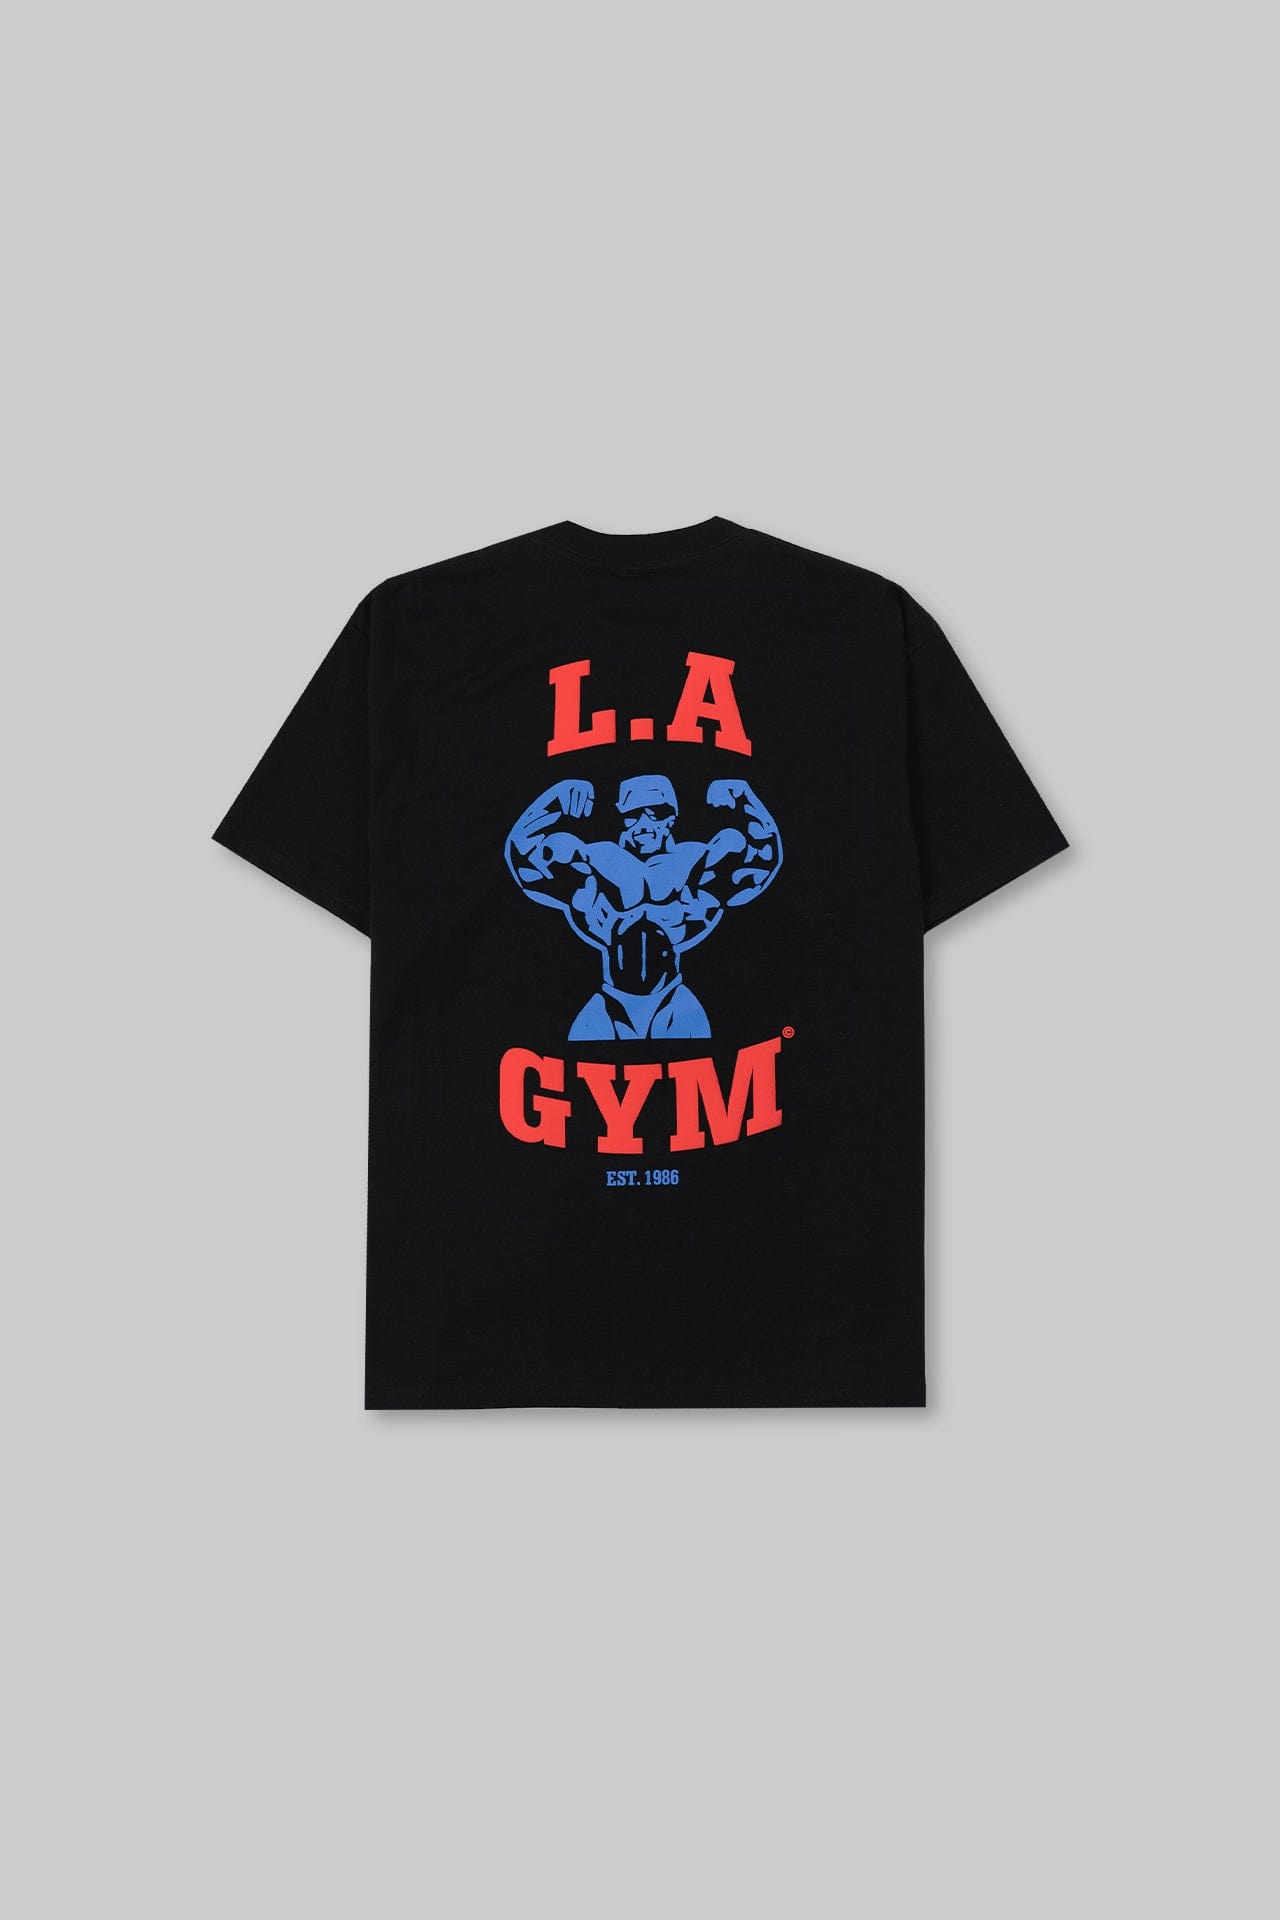 L.A Gym Tee Black